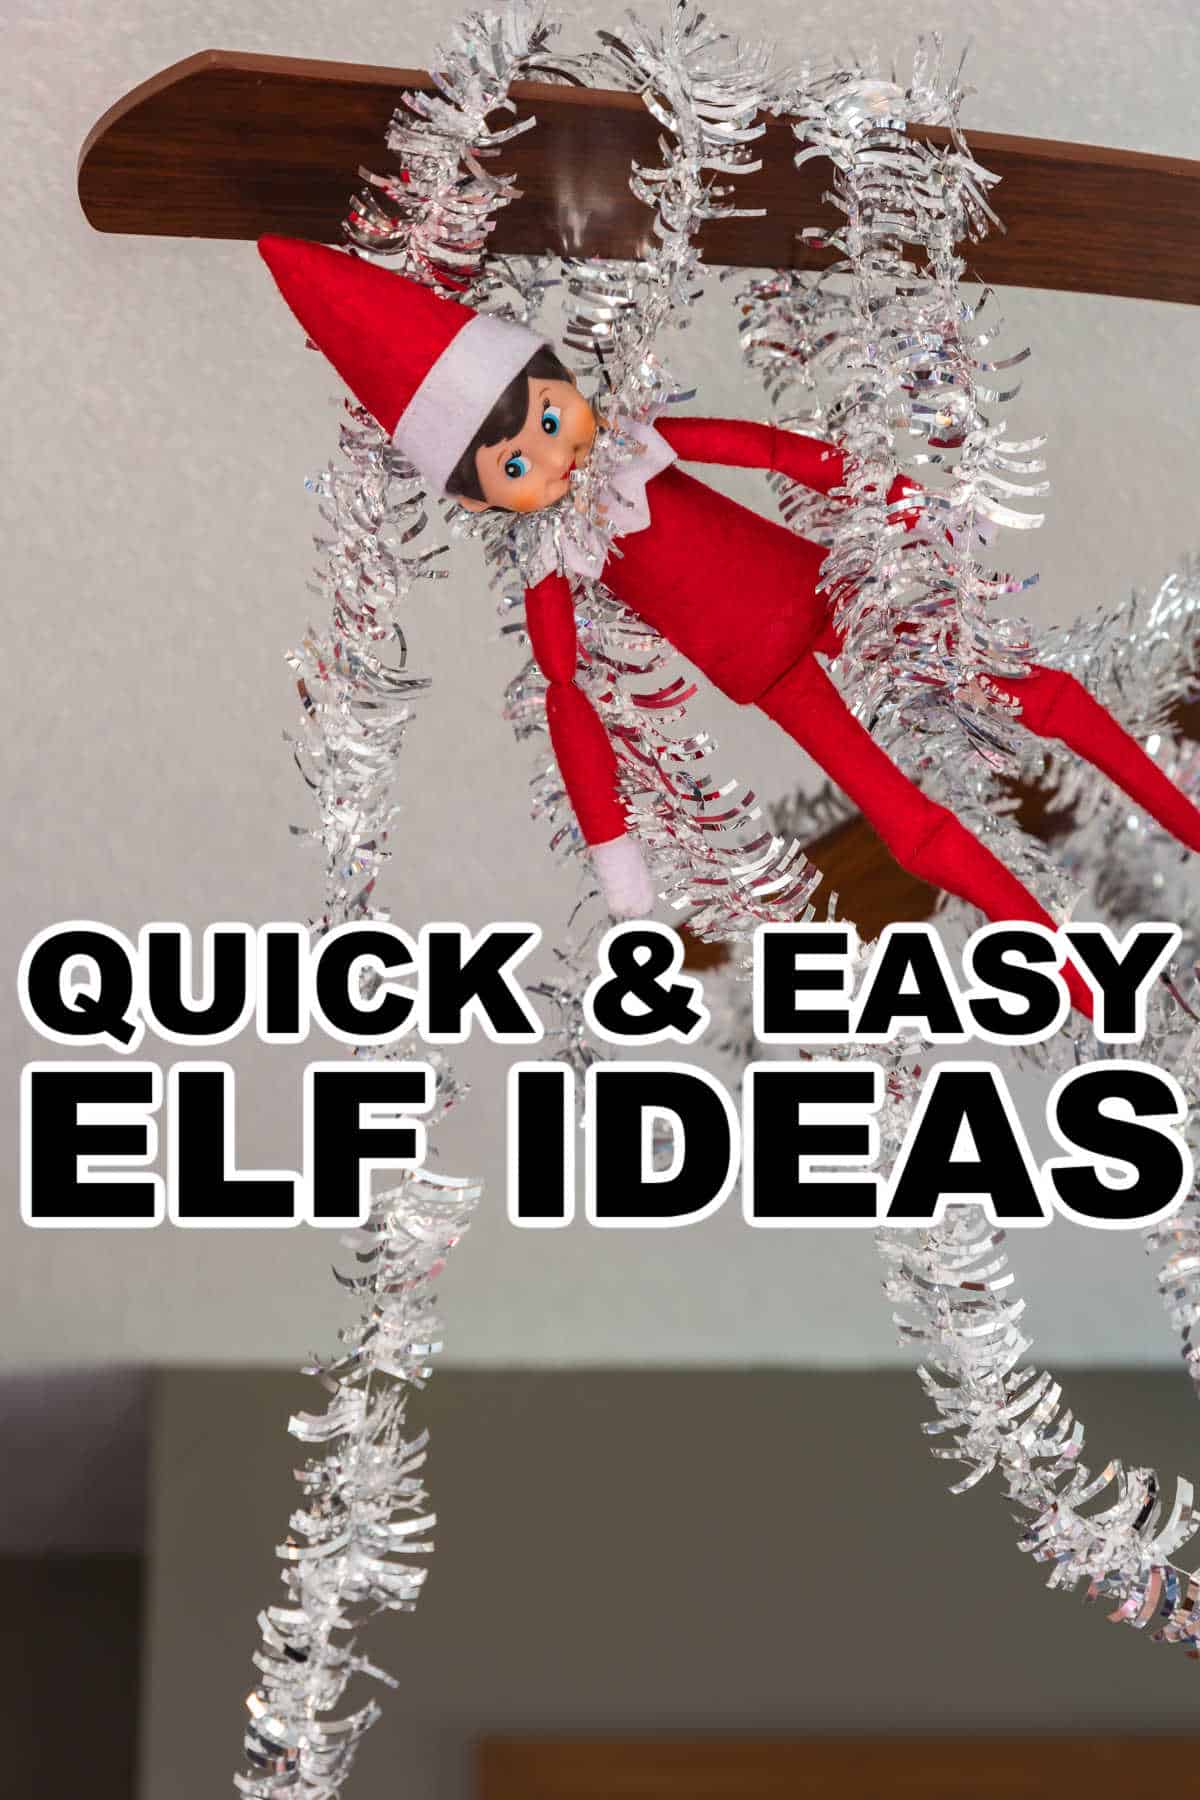 Quick and easy elf ideas.